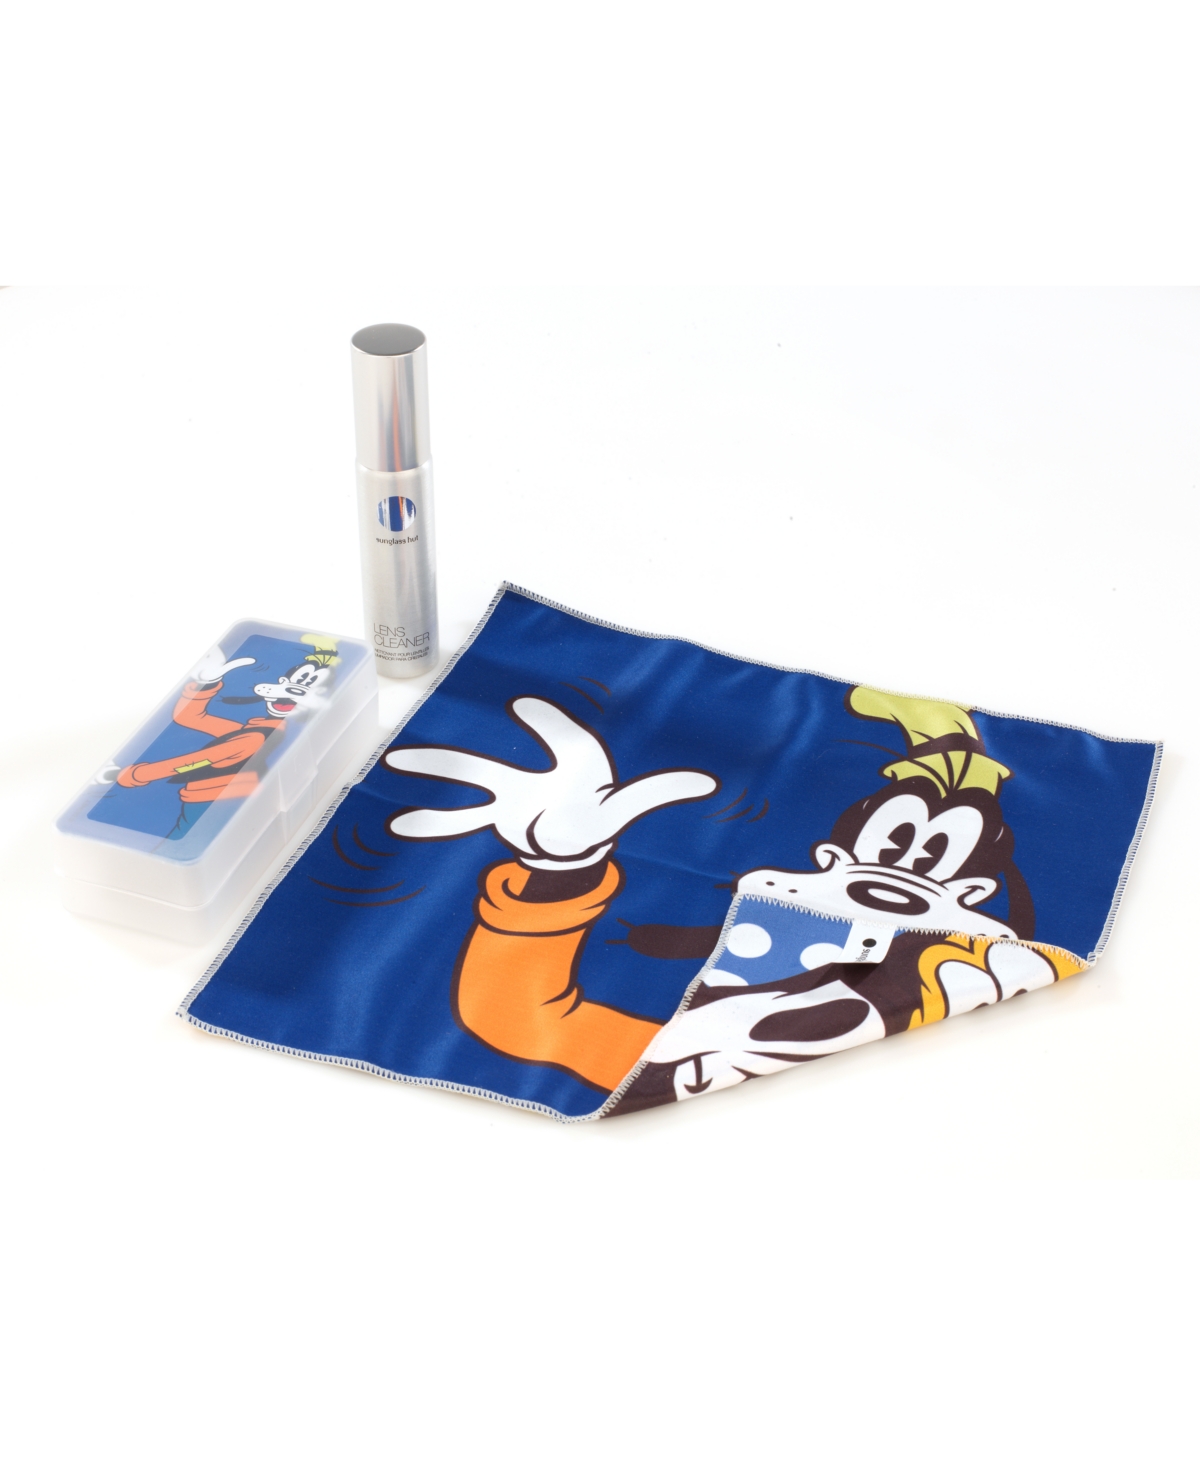 Sunglass Hut Disney Goofy Cleaning Kit, AHU0006CK - Multicolor